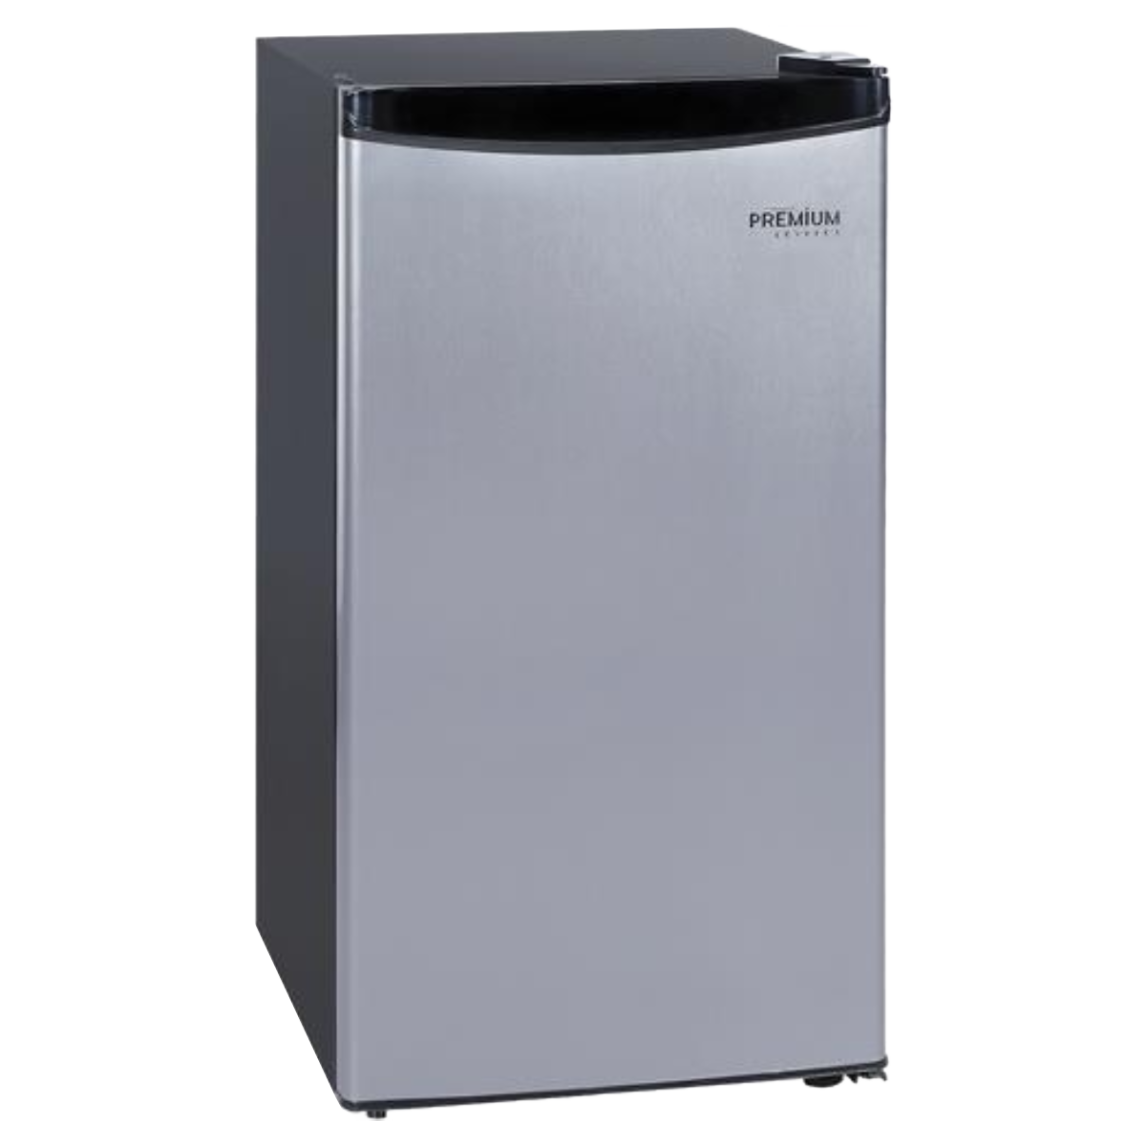 Premium - 3.2 CuFt Compact Mini Refrigerator In Black With Chiller Compartment